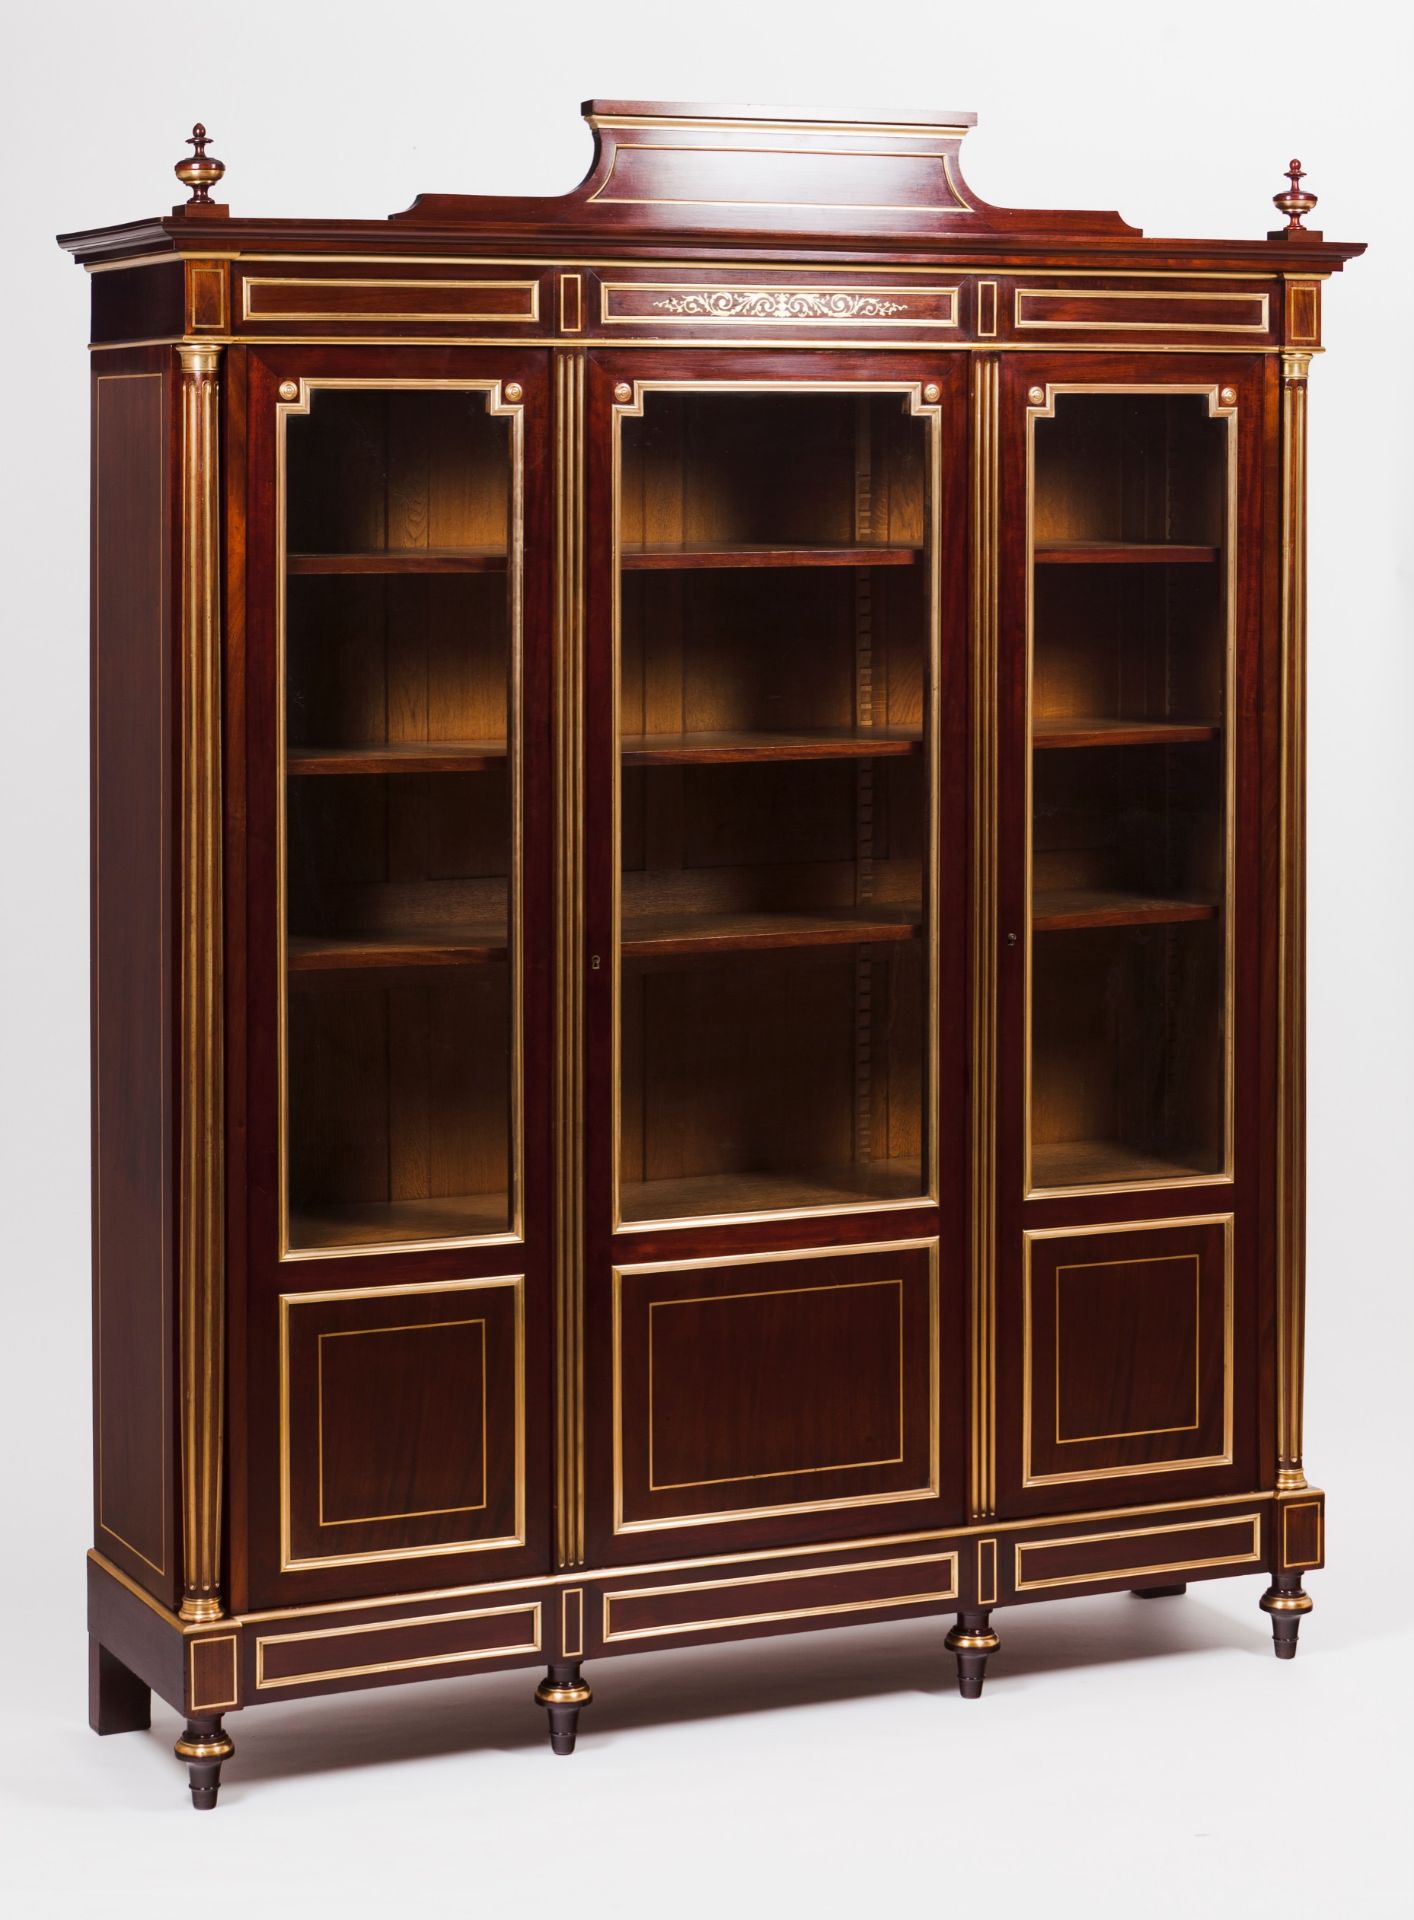 A Louis XVI style bookcase